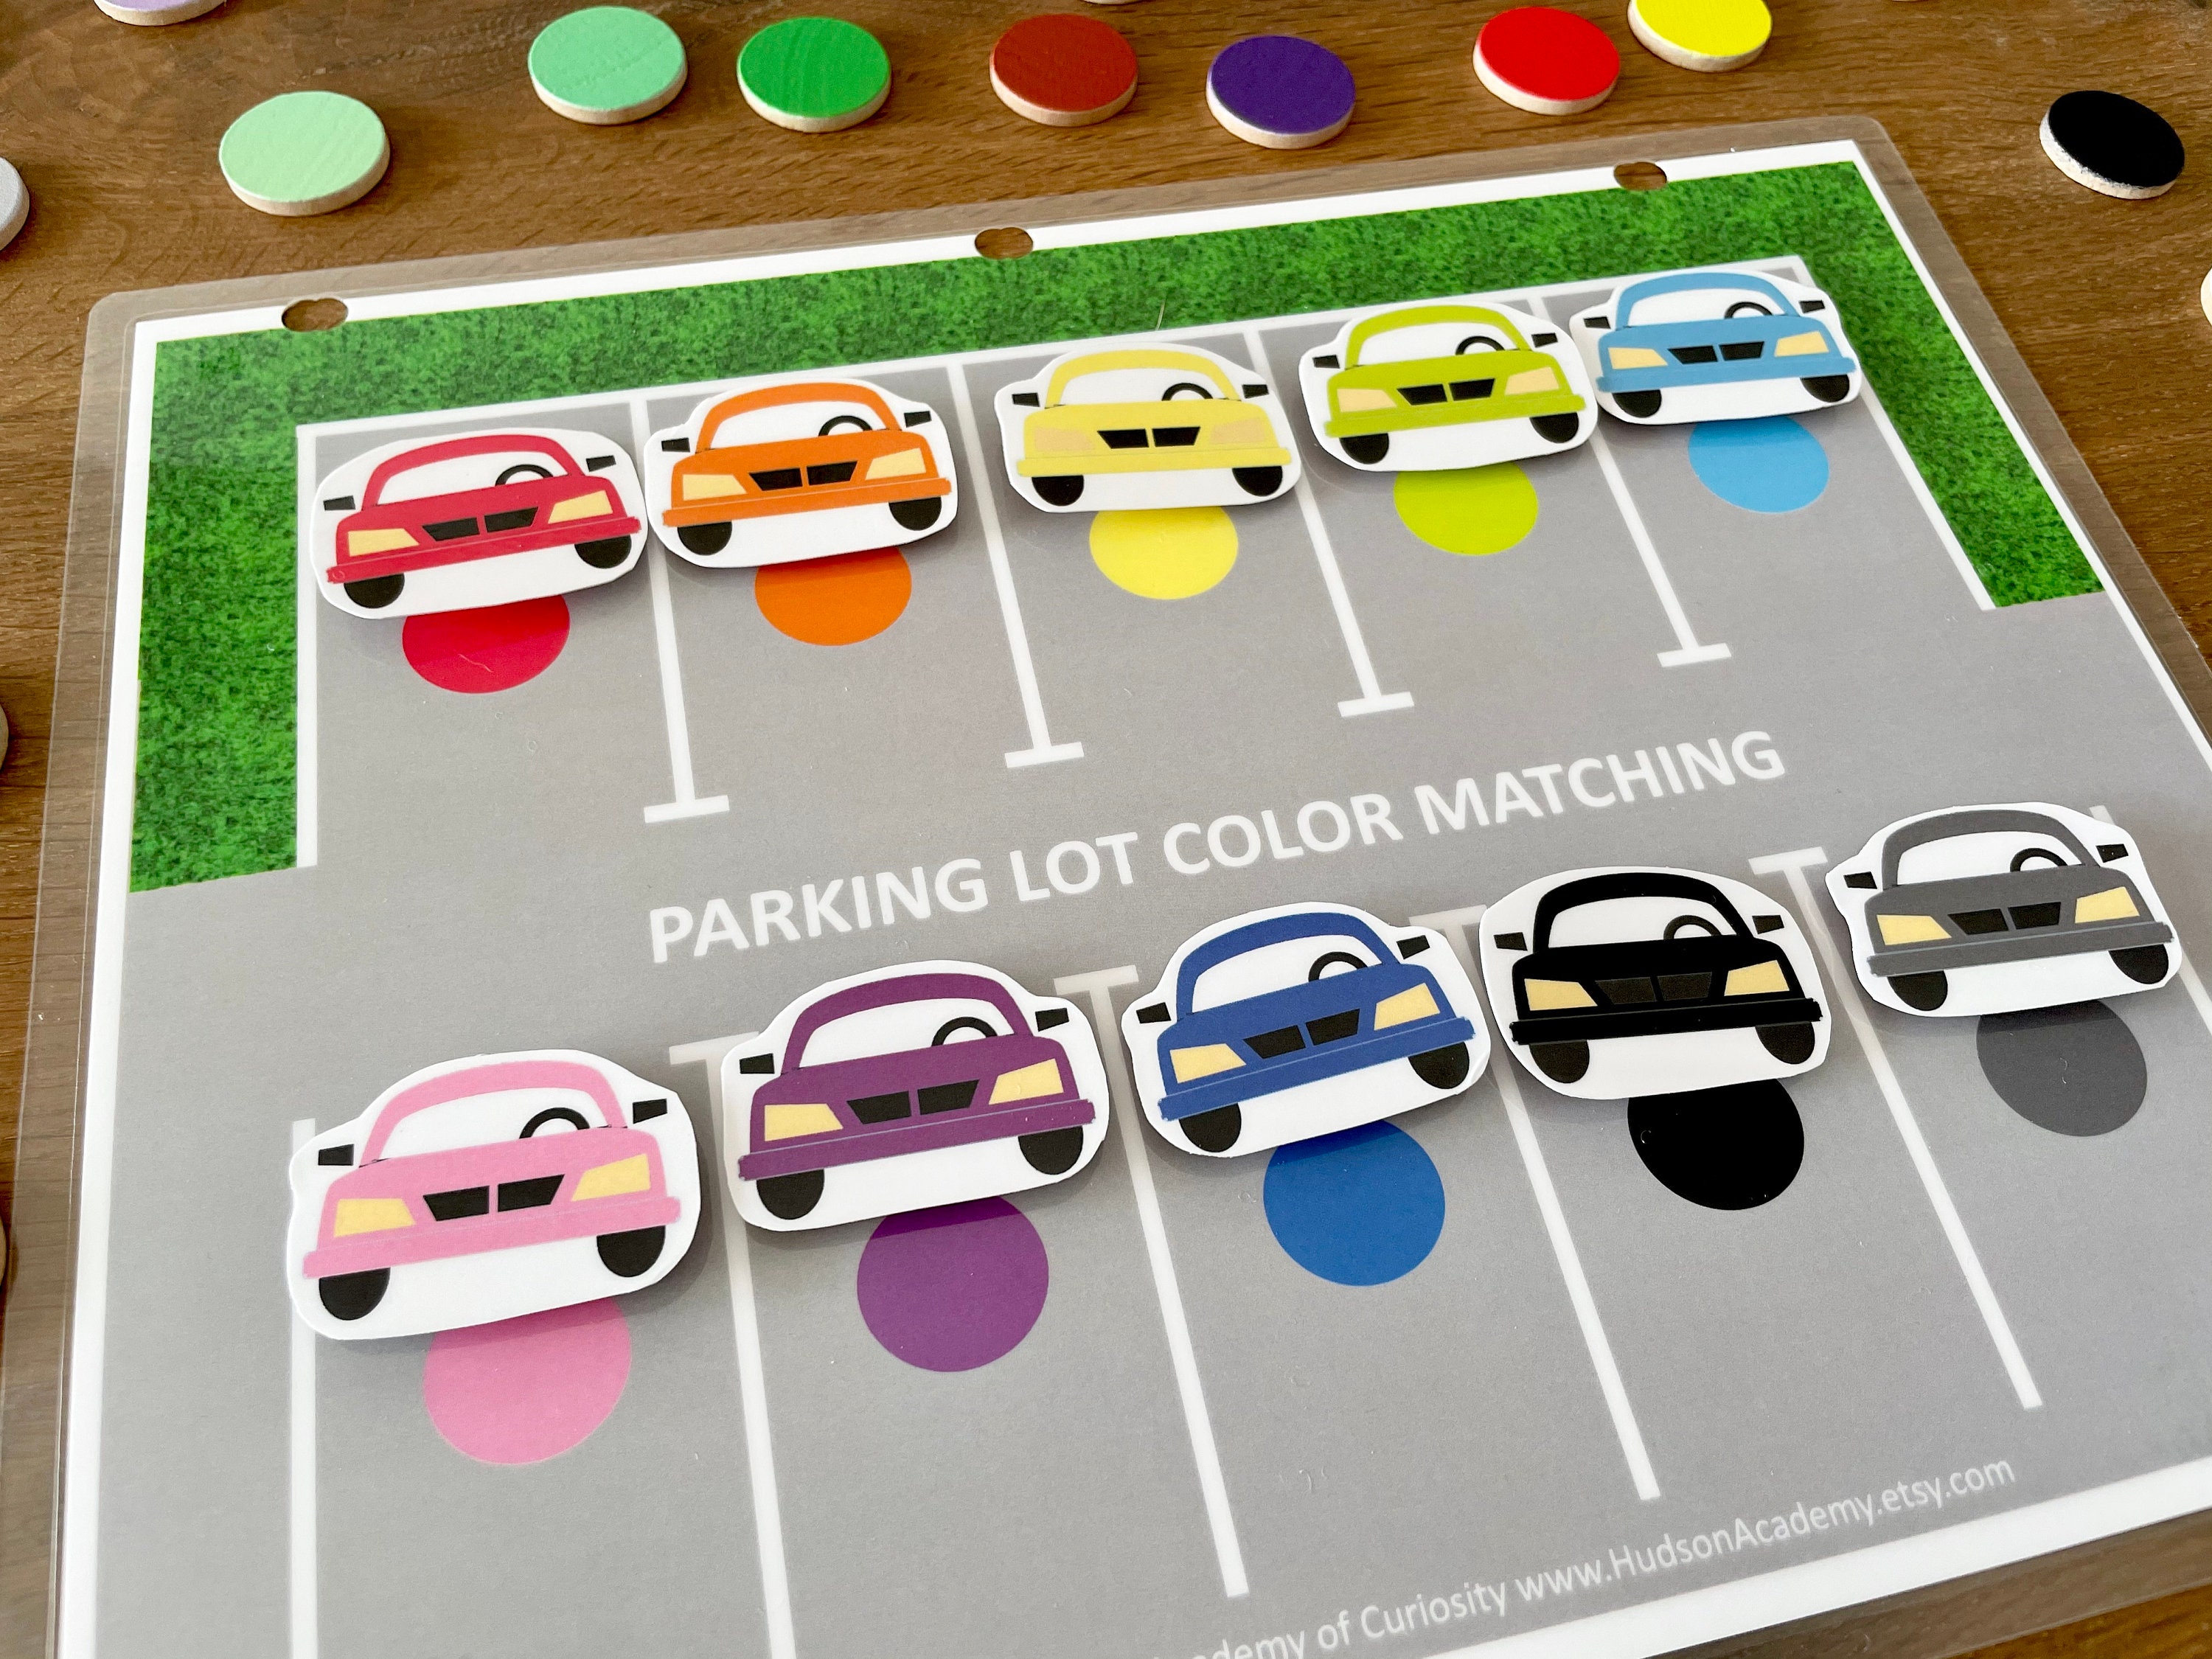 Montessori Inspired Activities for Pre-Schoolers: Car Parking Game